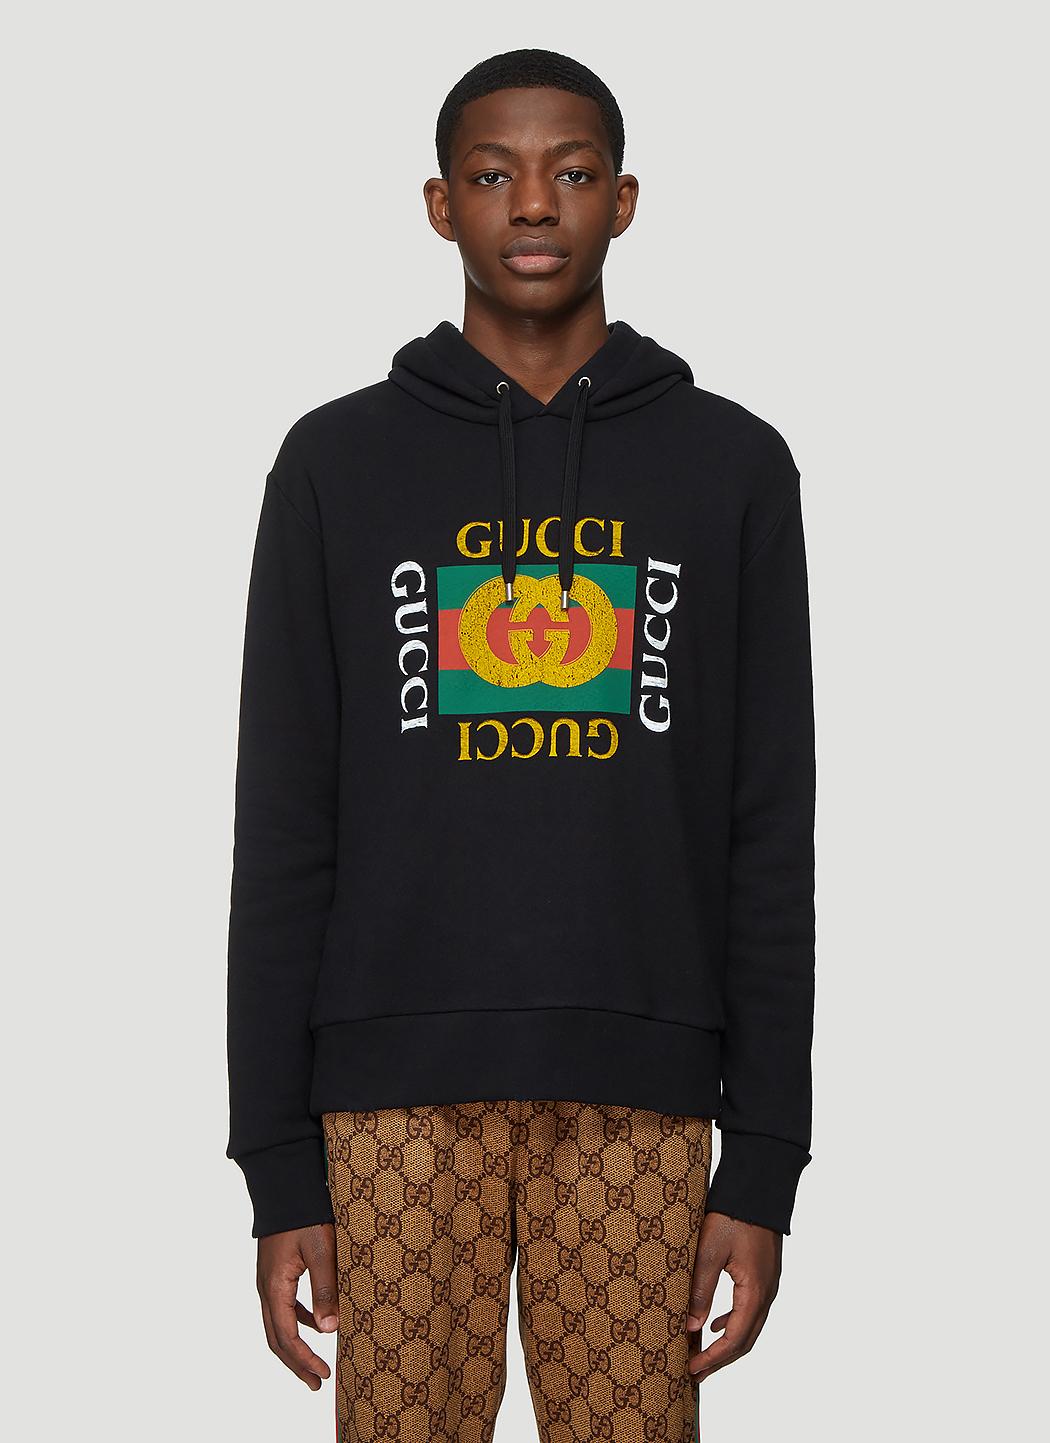 Gucci Cotton Fake Logo Hooded Sweatshirt In Black for Men - Lyst